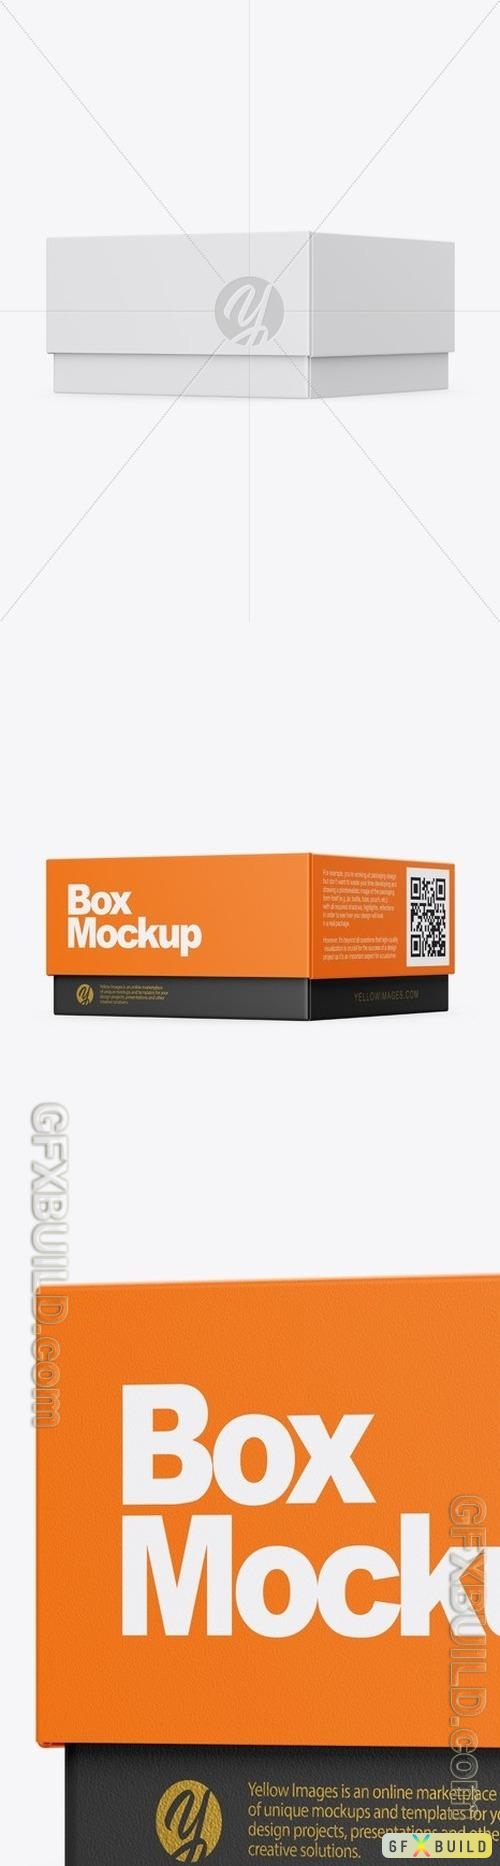 Paper Box Mockup 46062